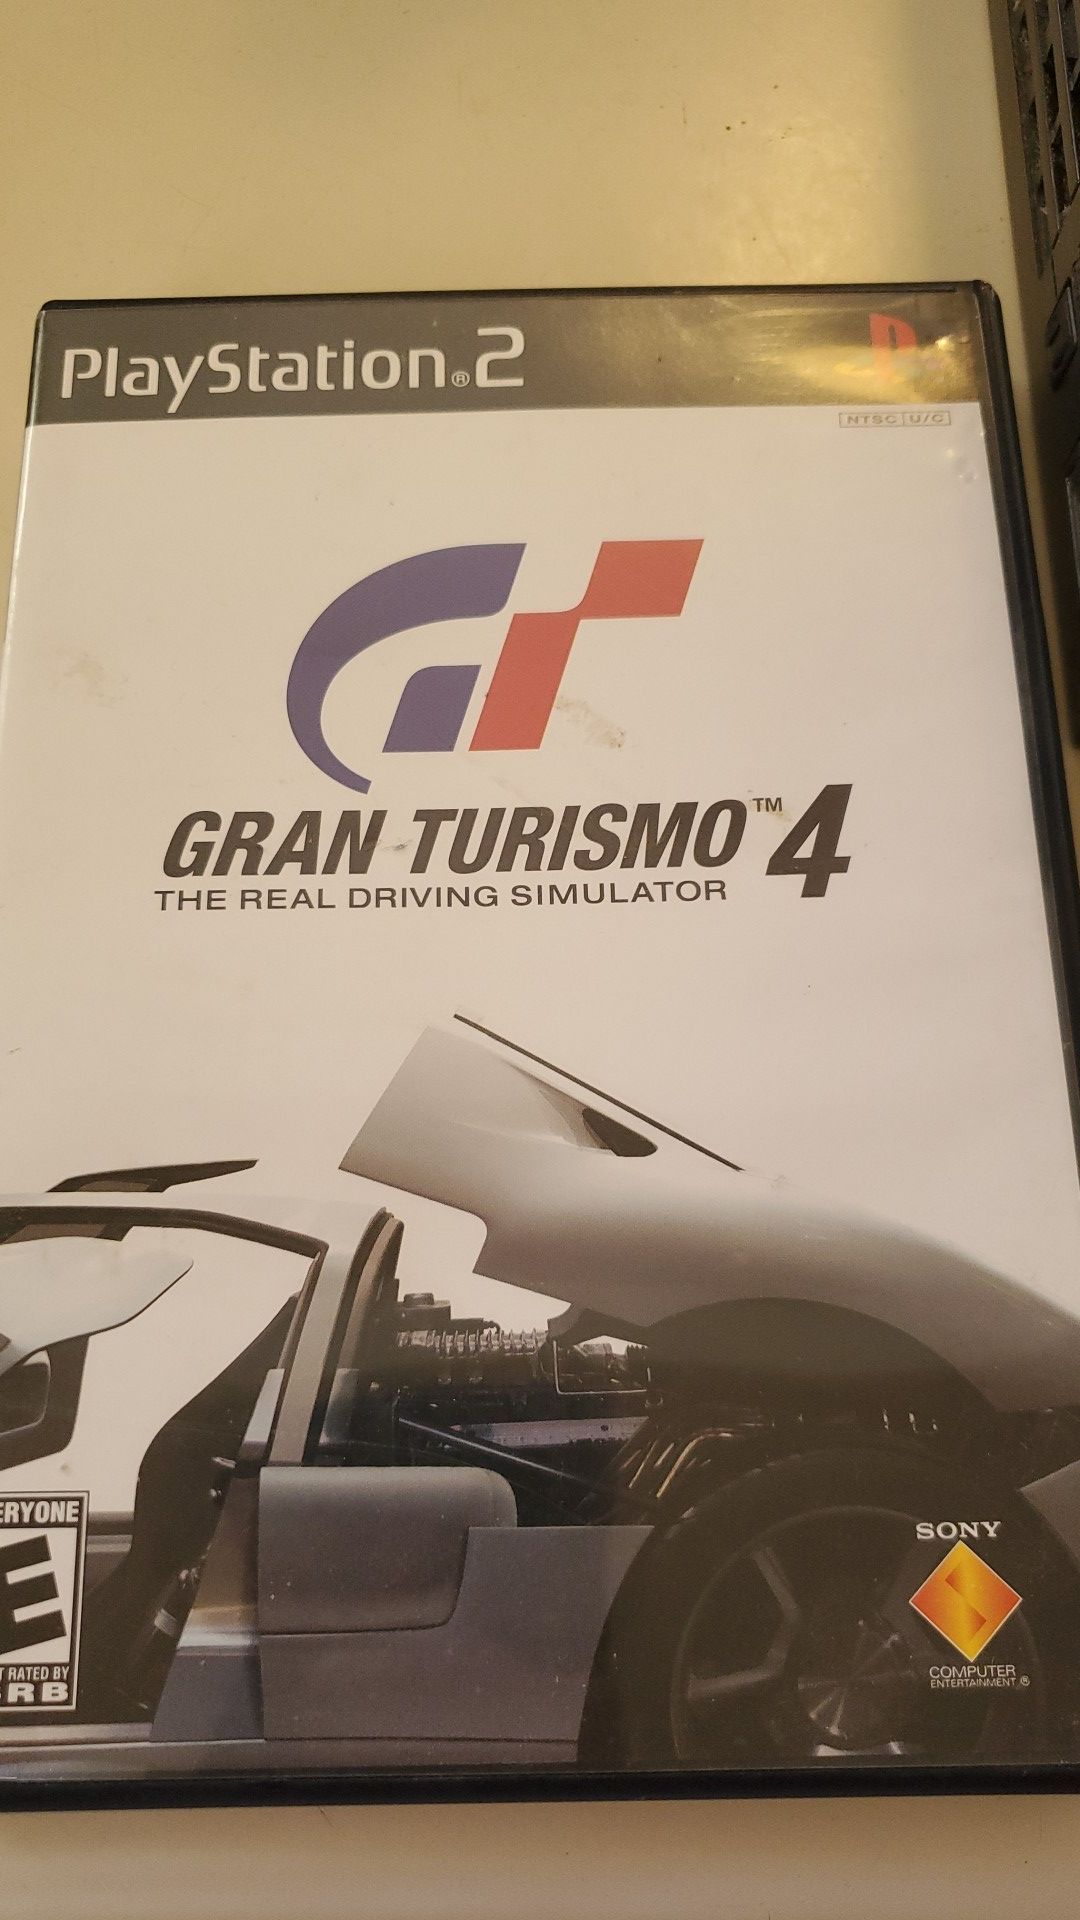 PS2 Gran Turismo 4 game